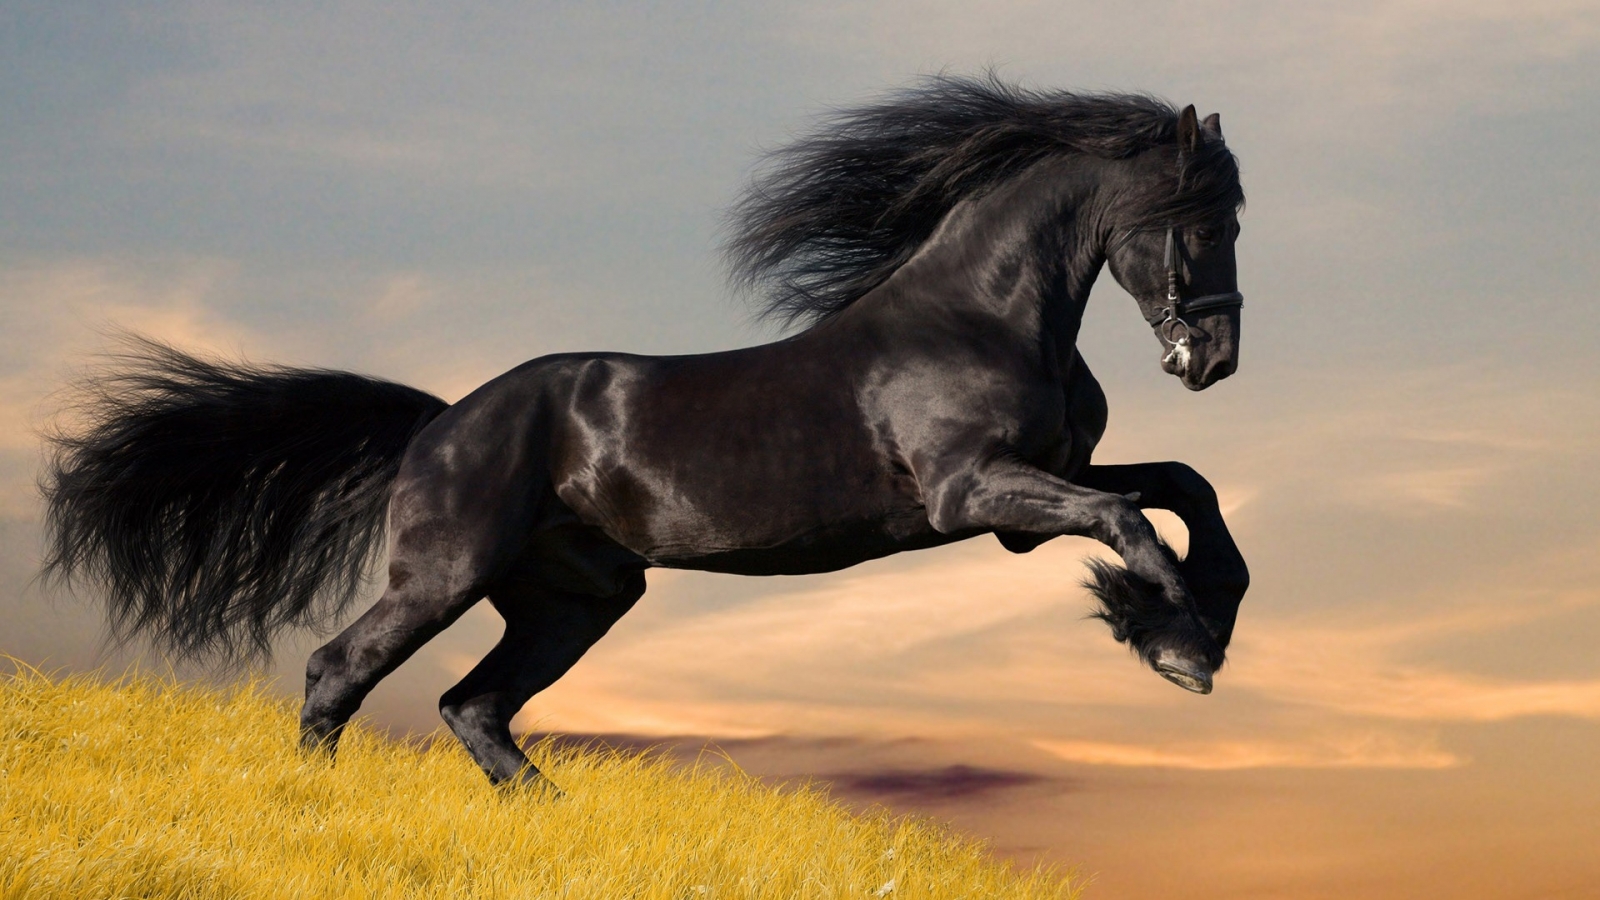 Amazing Black Horse for 1600 x 900 HDTV resolution